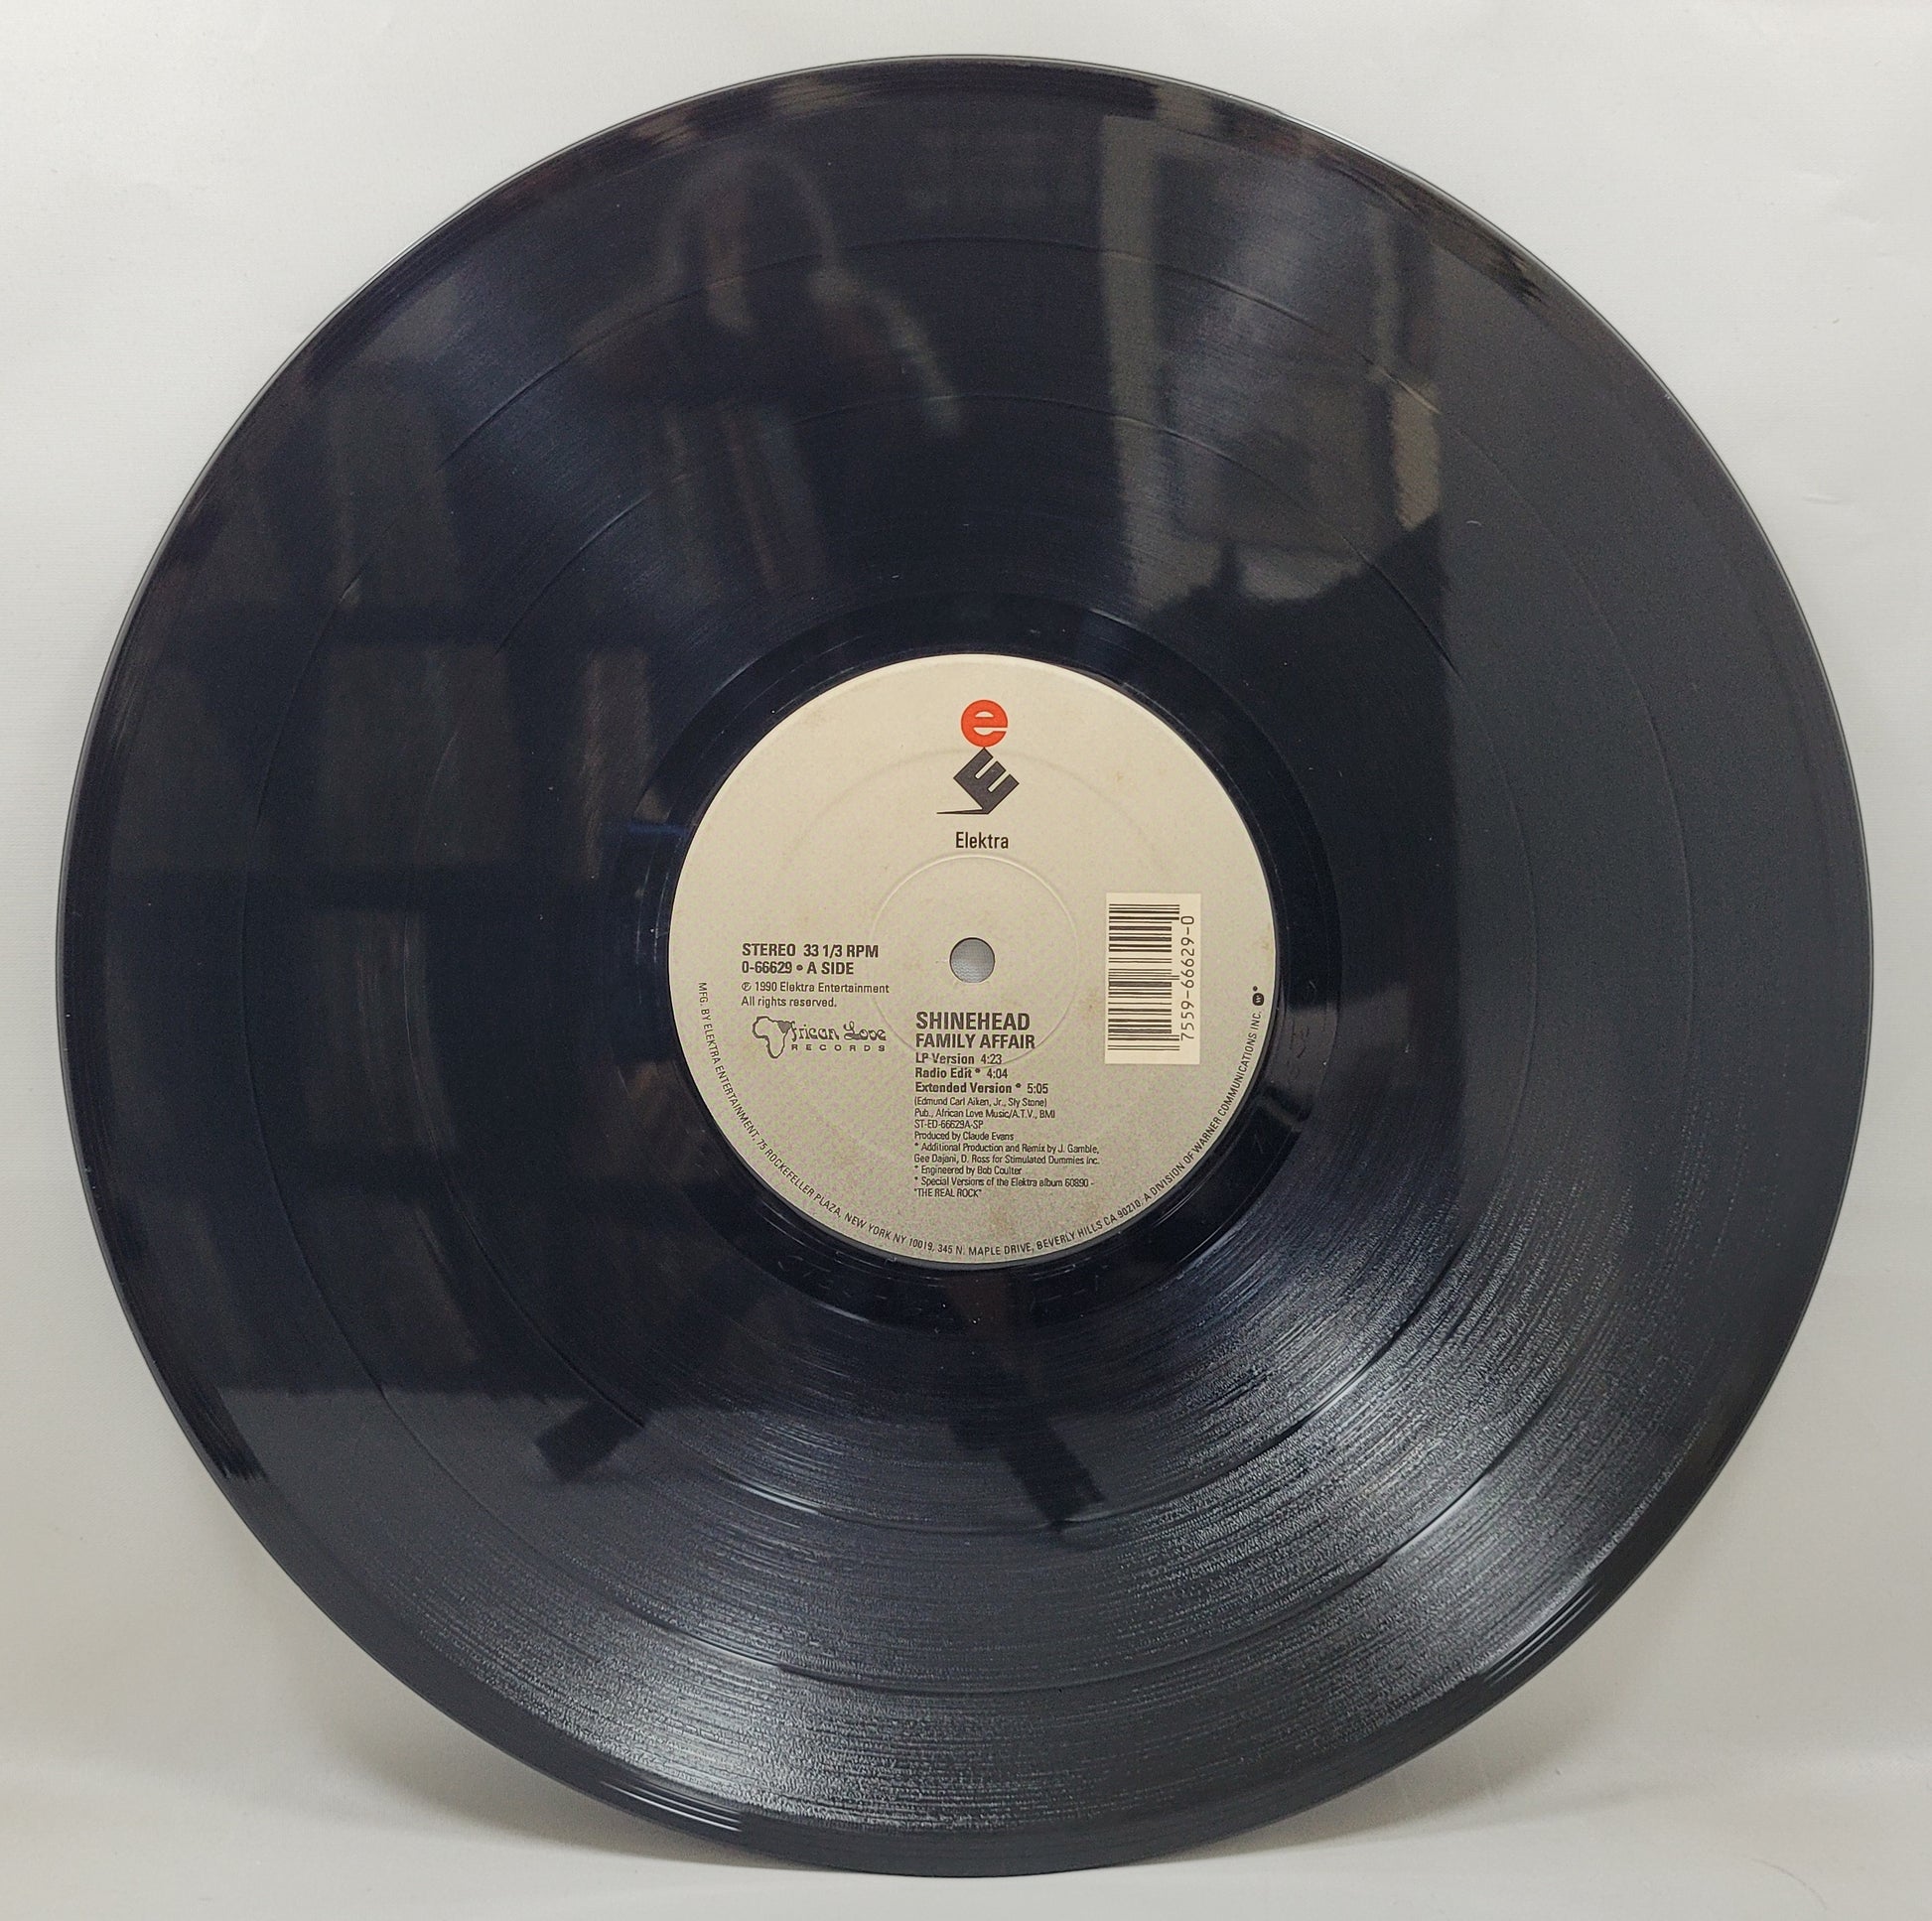 Shinehead - Family Affair [1990 Used Vinyl Record 12" Single]